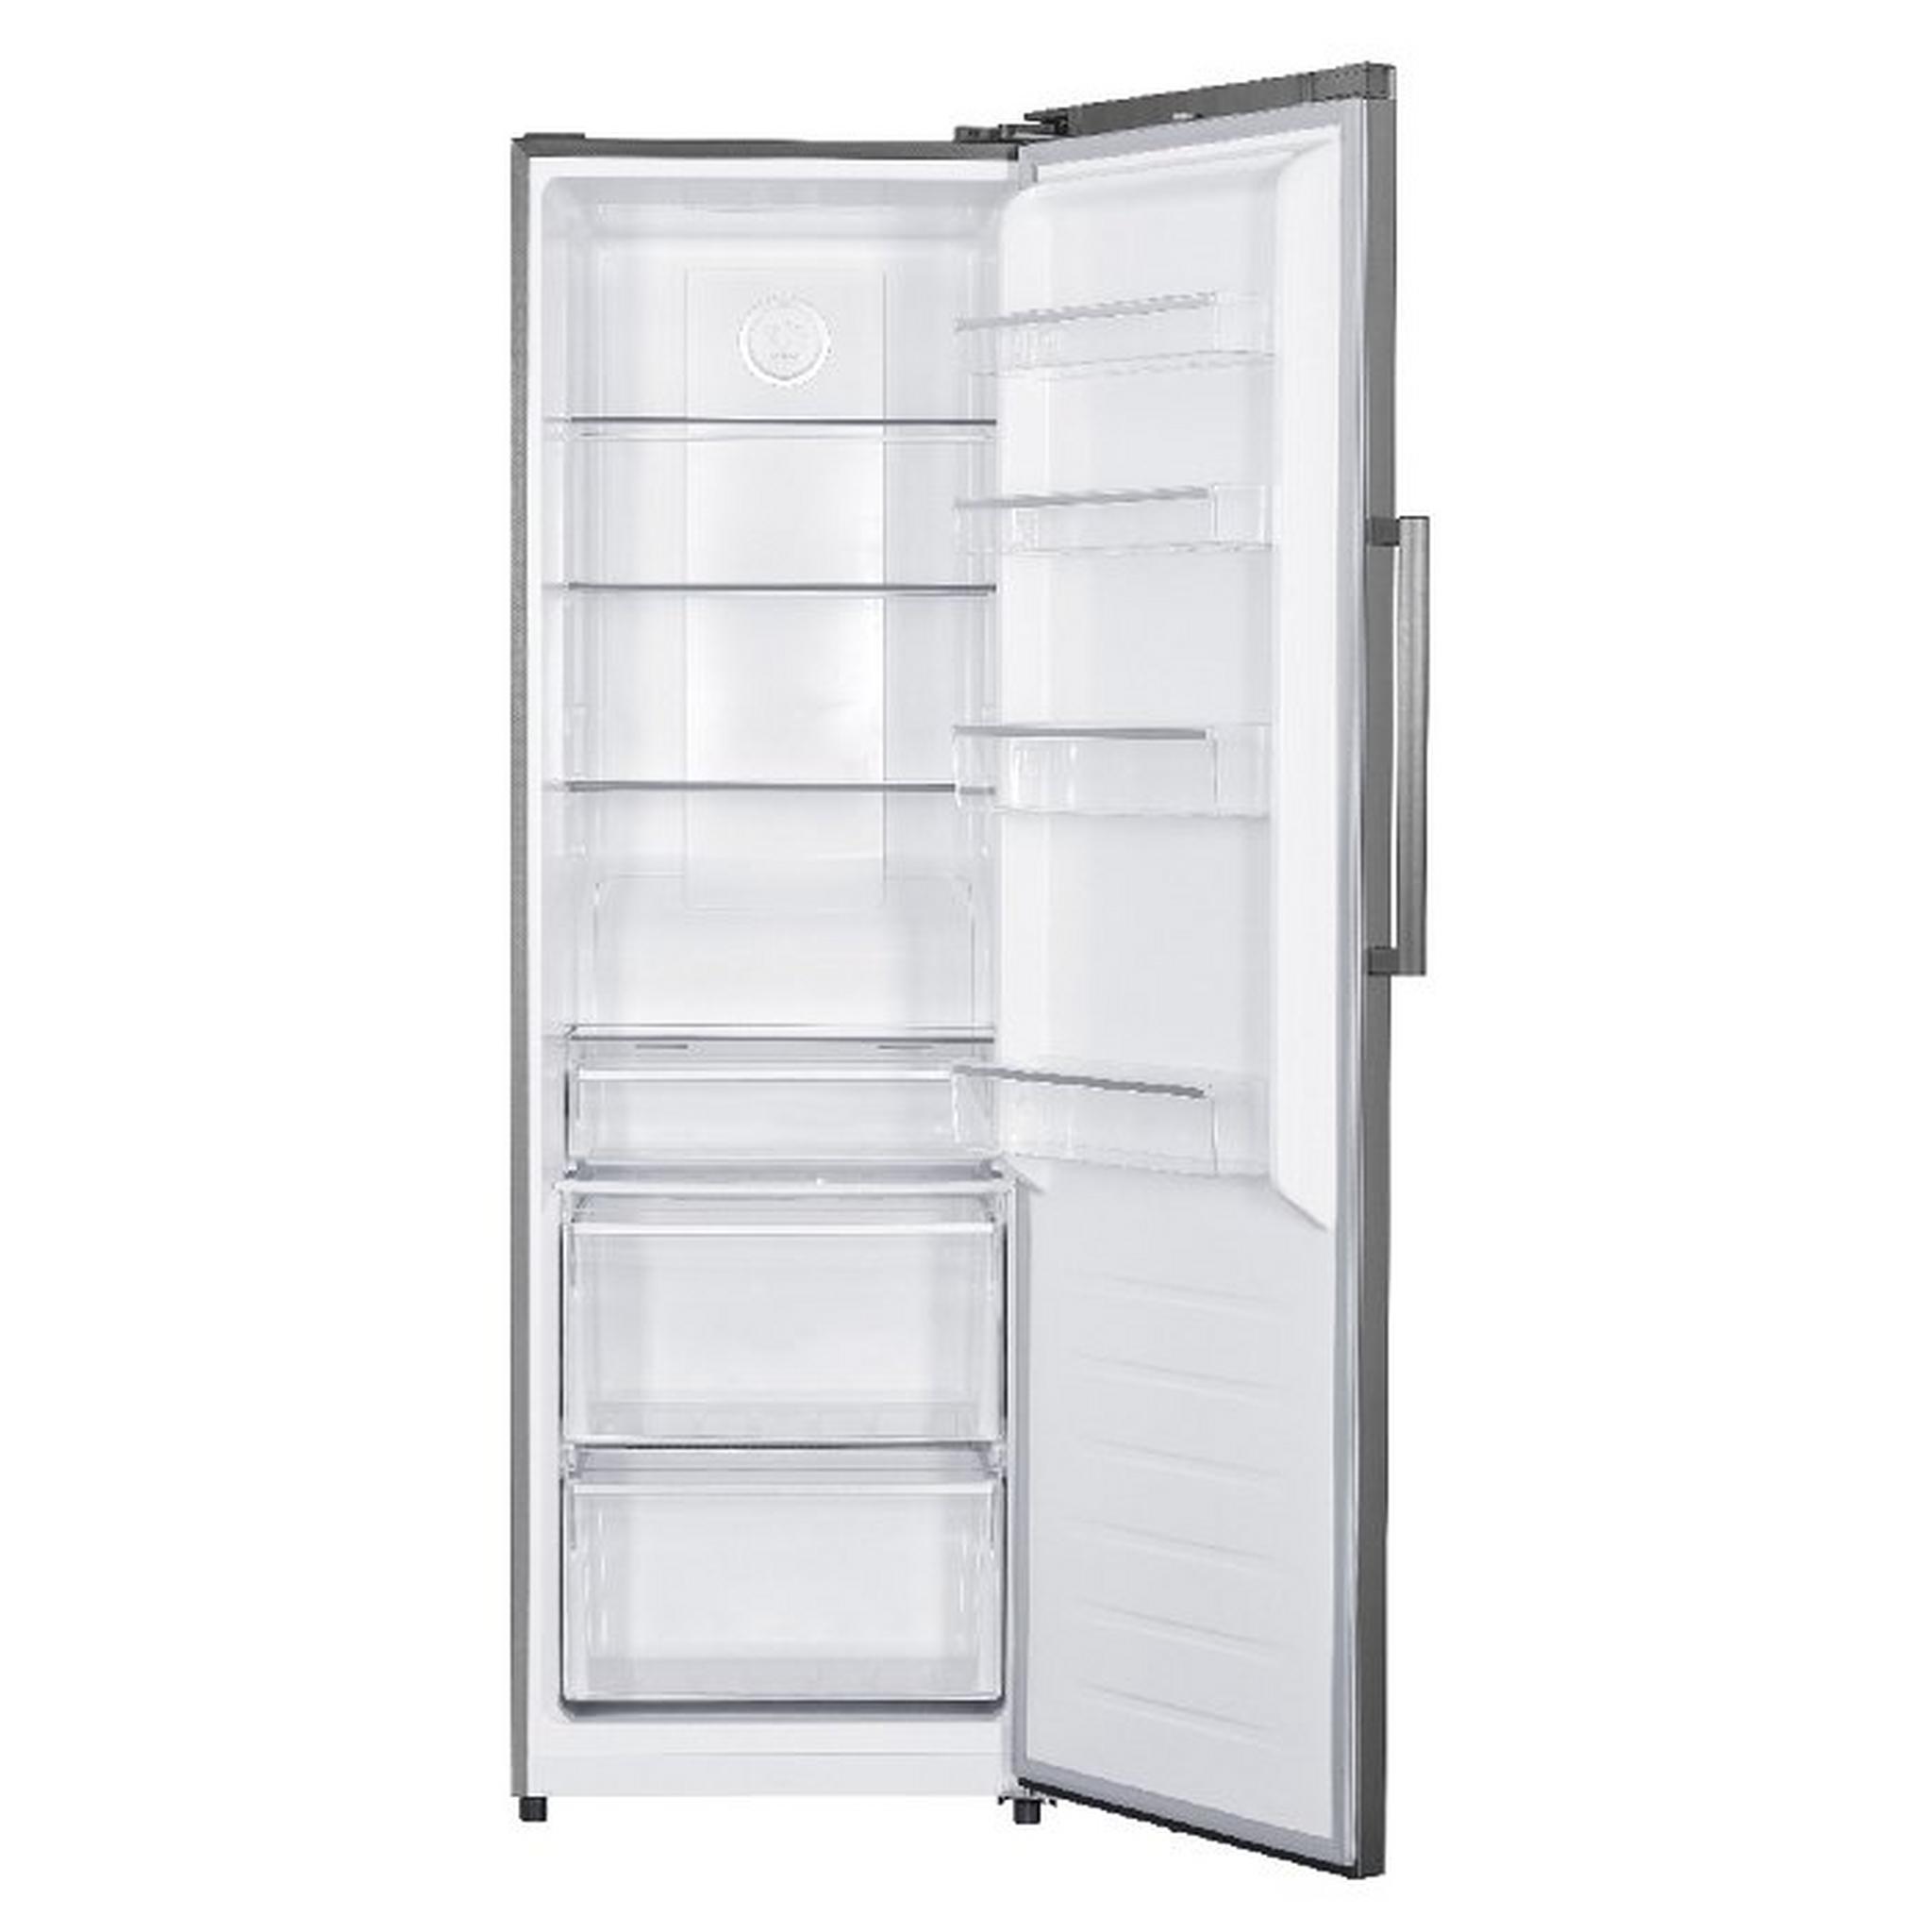 Wansa Single Door Refrigerator 13.7 Cft (WROD3-388-NFSLC82) Inox